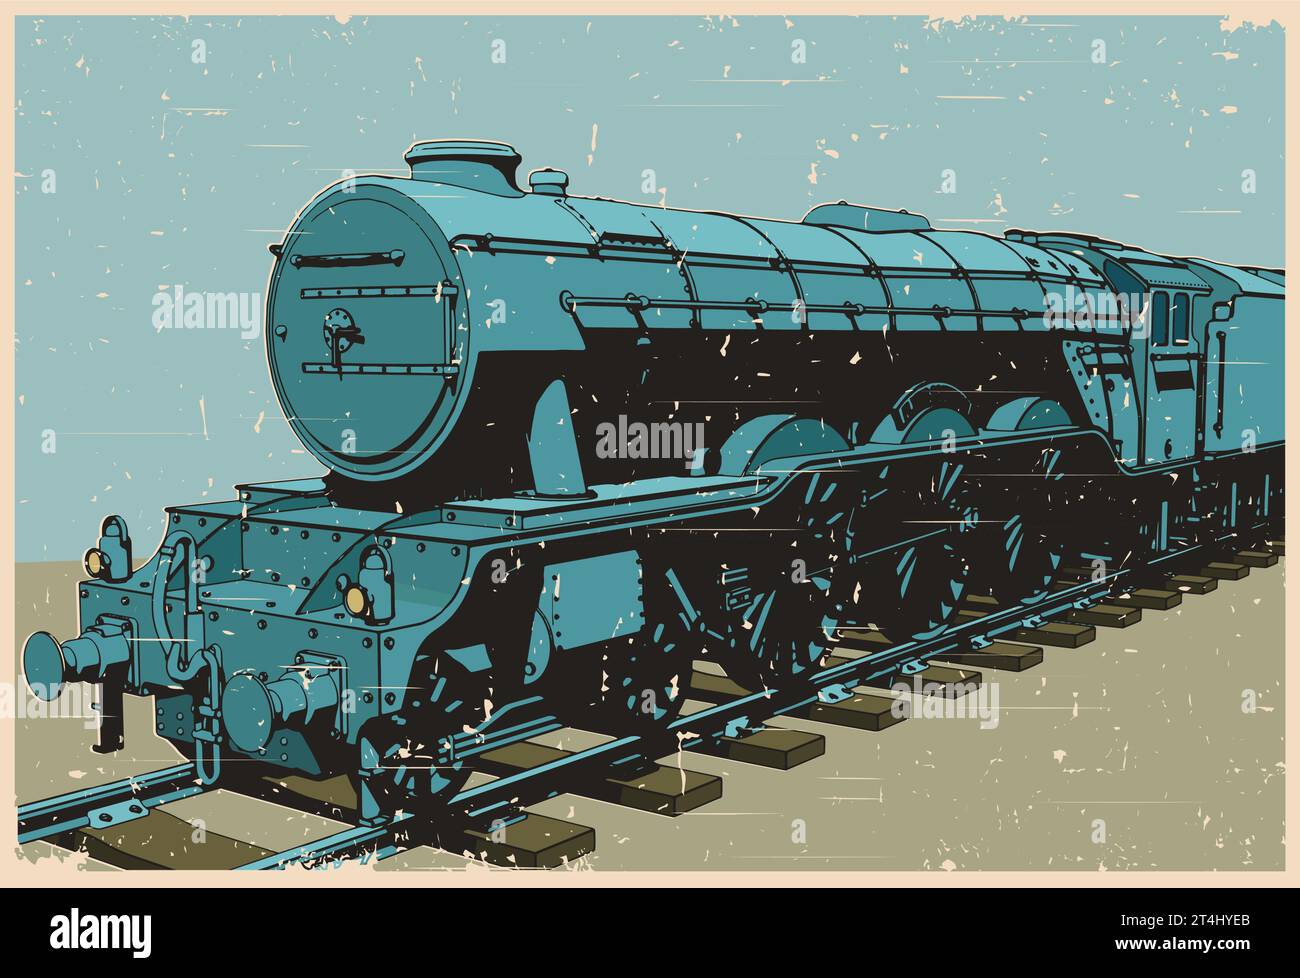 Stilisierte Vektorillustration einer Dampflokomotive im Retro-Plakatstil Stock Vektor